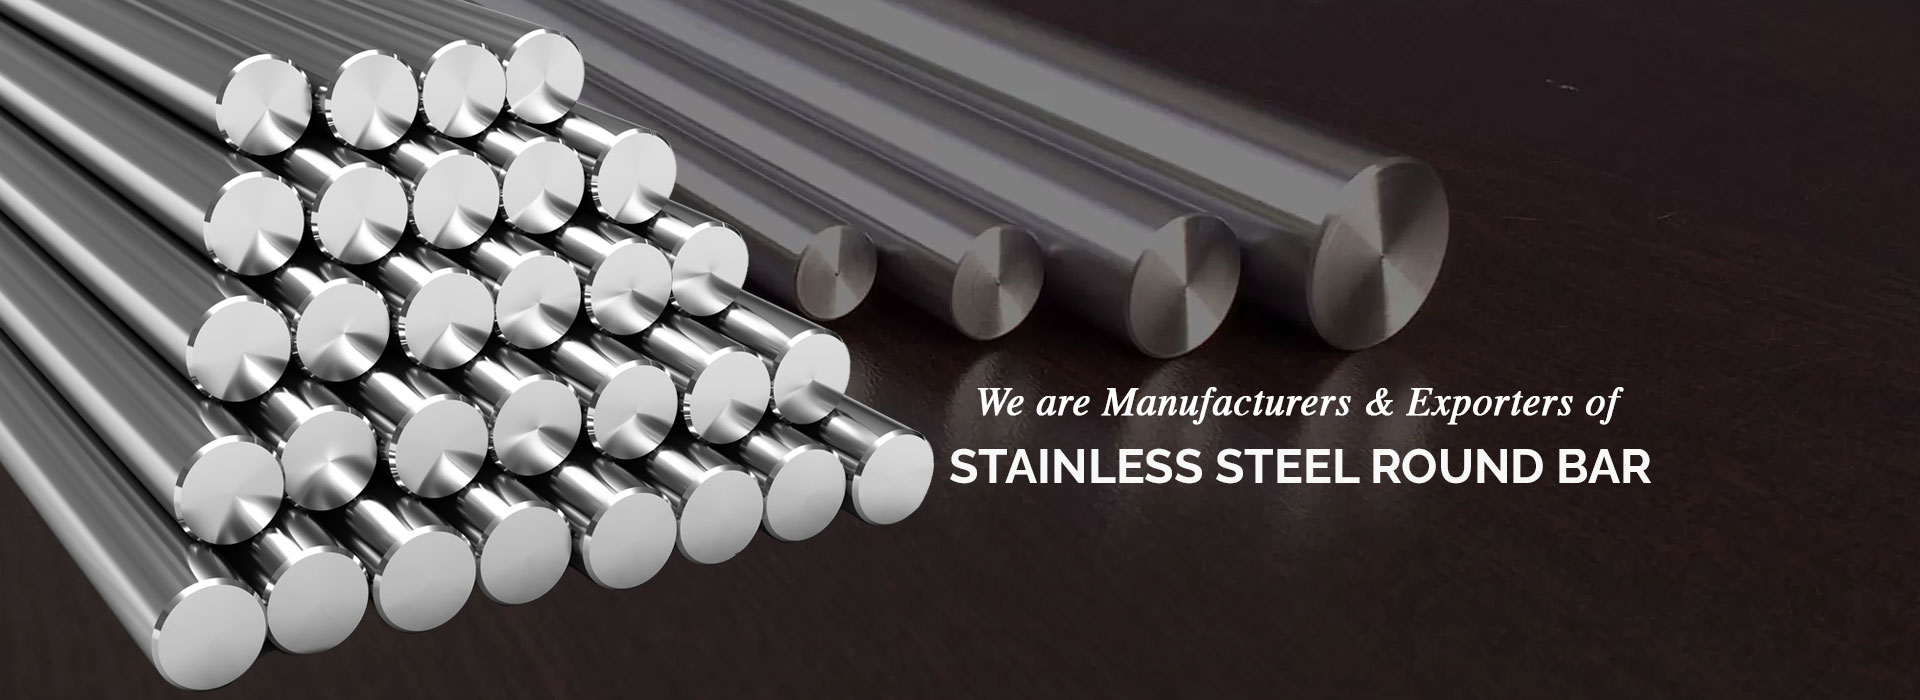 Stainless Steel Round Bar Manufacturers in Nigeria